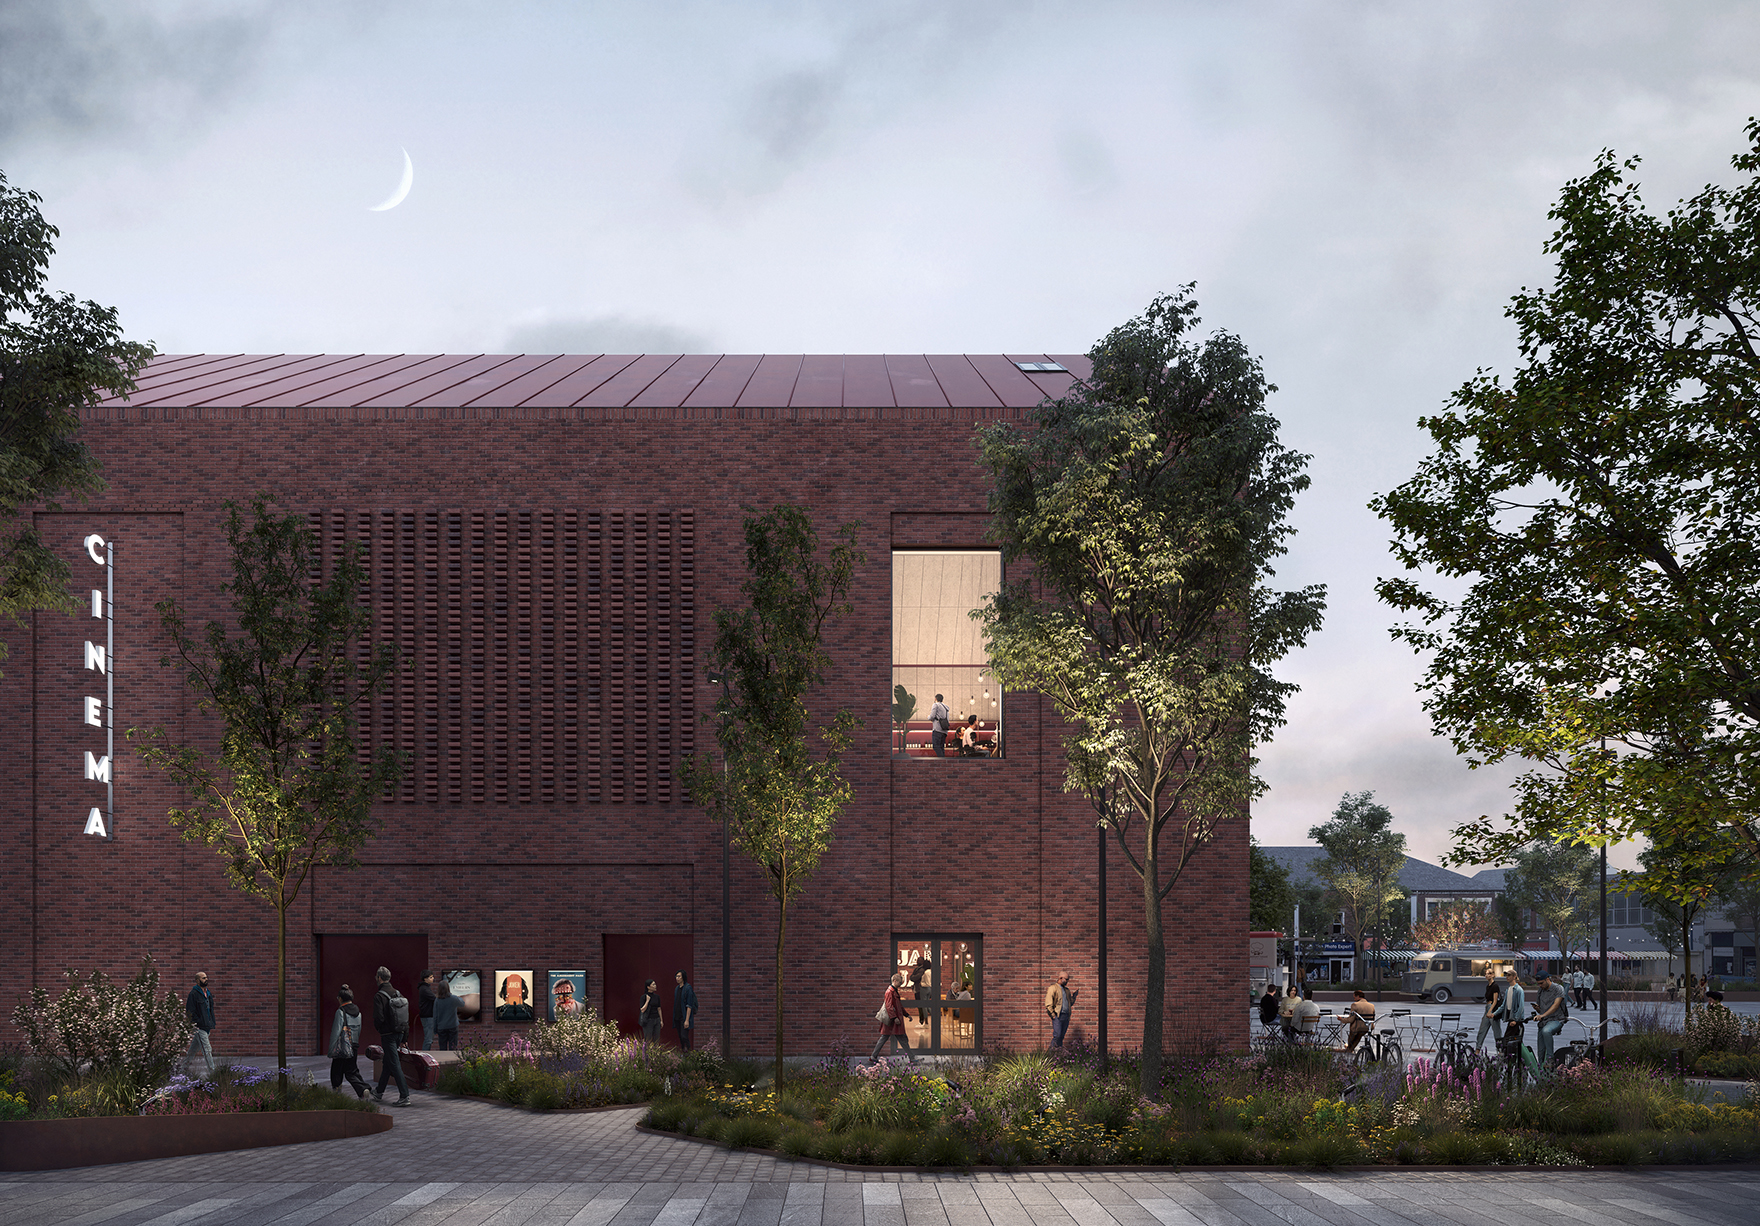 Blyth Culture Hub Market Place Cinema Construction Starts Faulknerbrowns Architects Lh